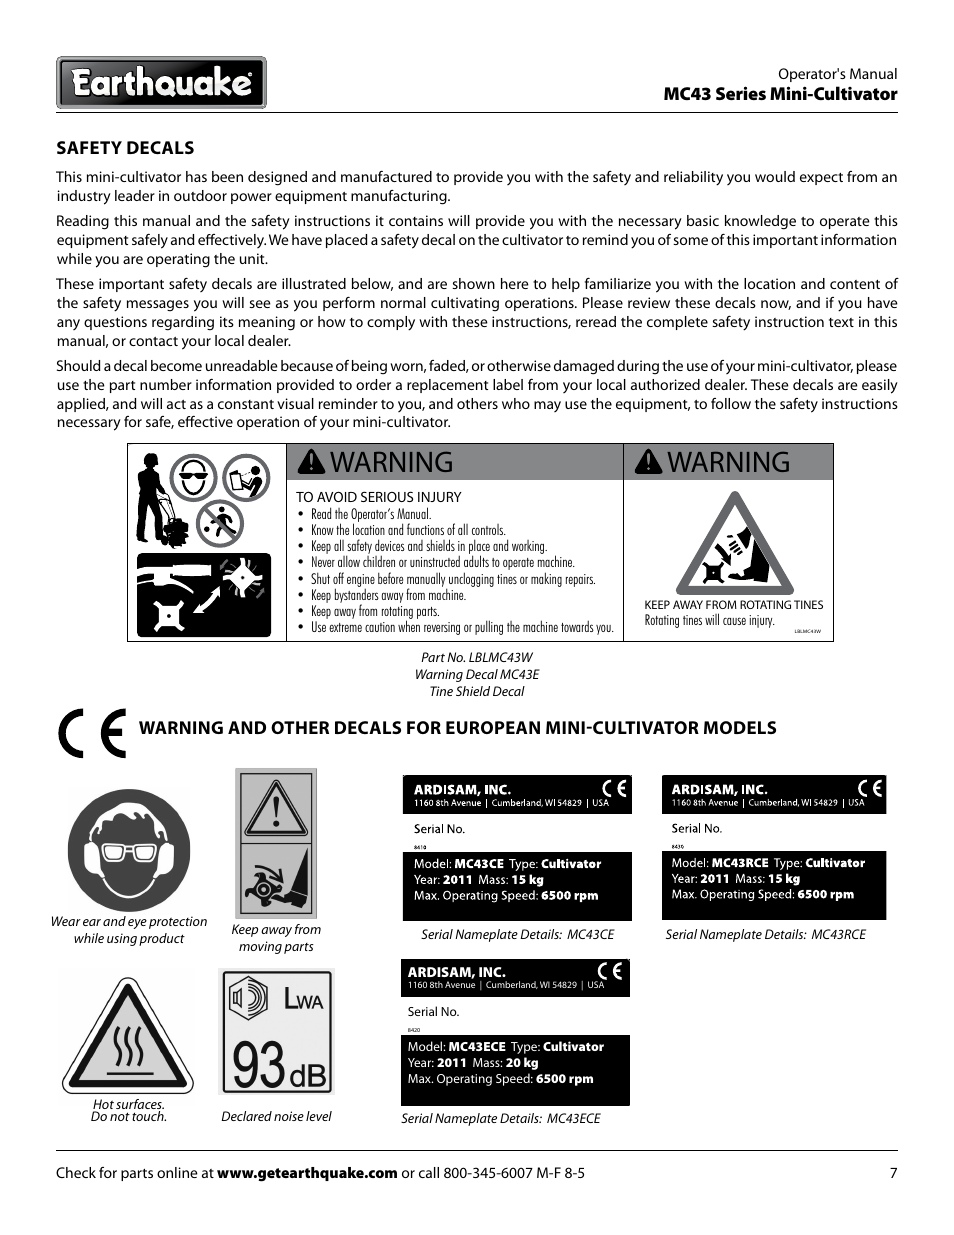 Warning, Mc43 series mini-cultivator, Safety decals | EarthQuake MC43E